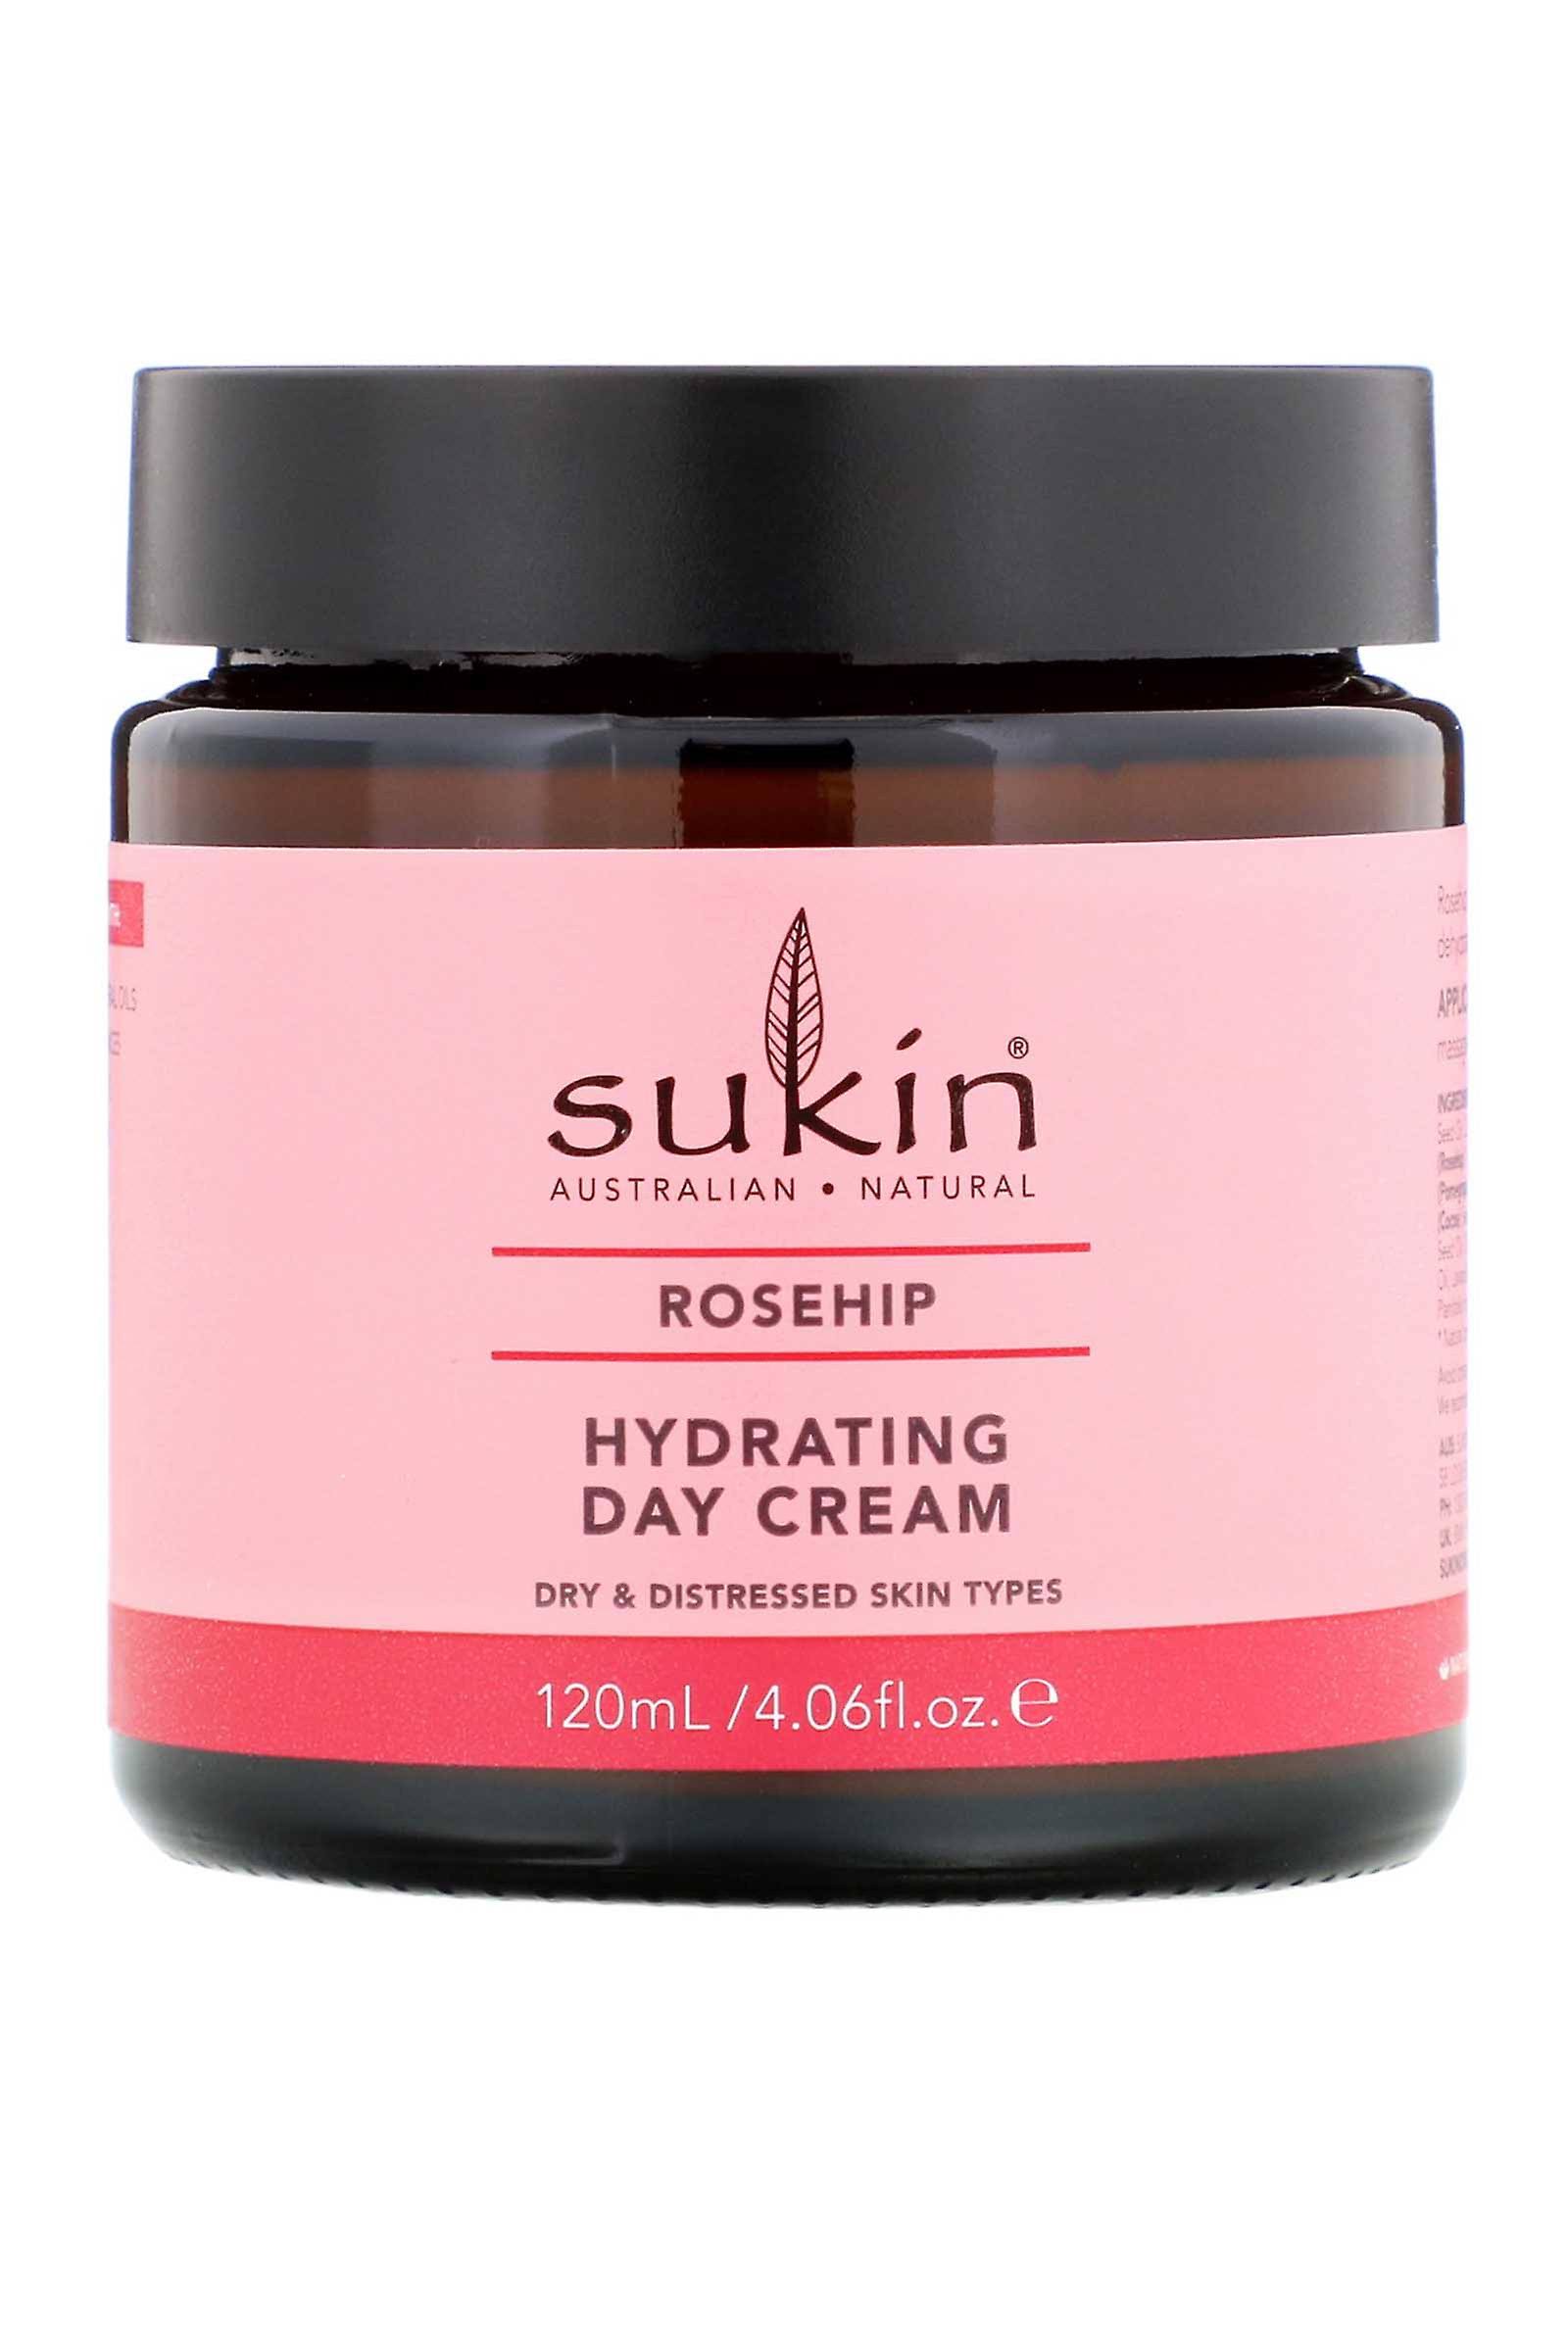 Sukin Rose Hip Hydrating Day Cream - 120ml